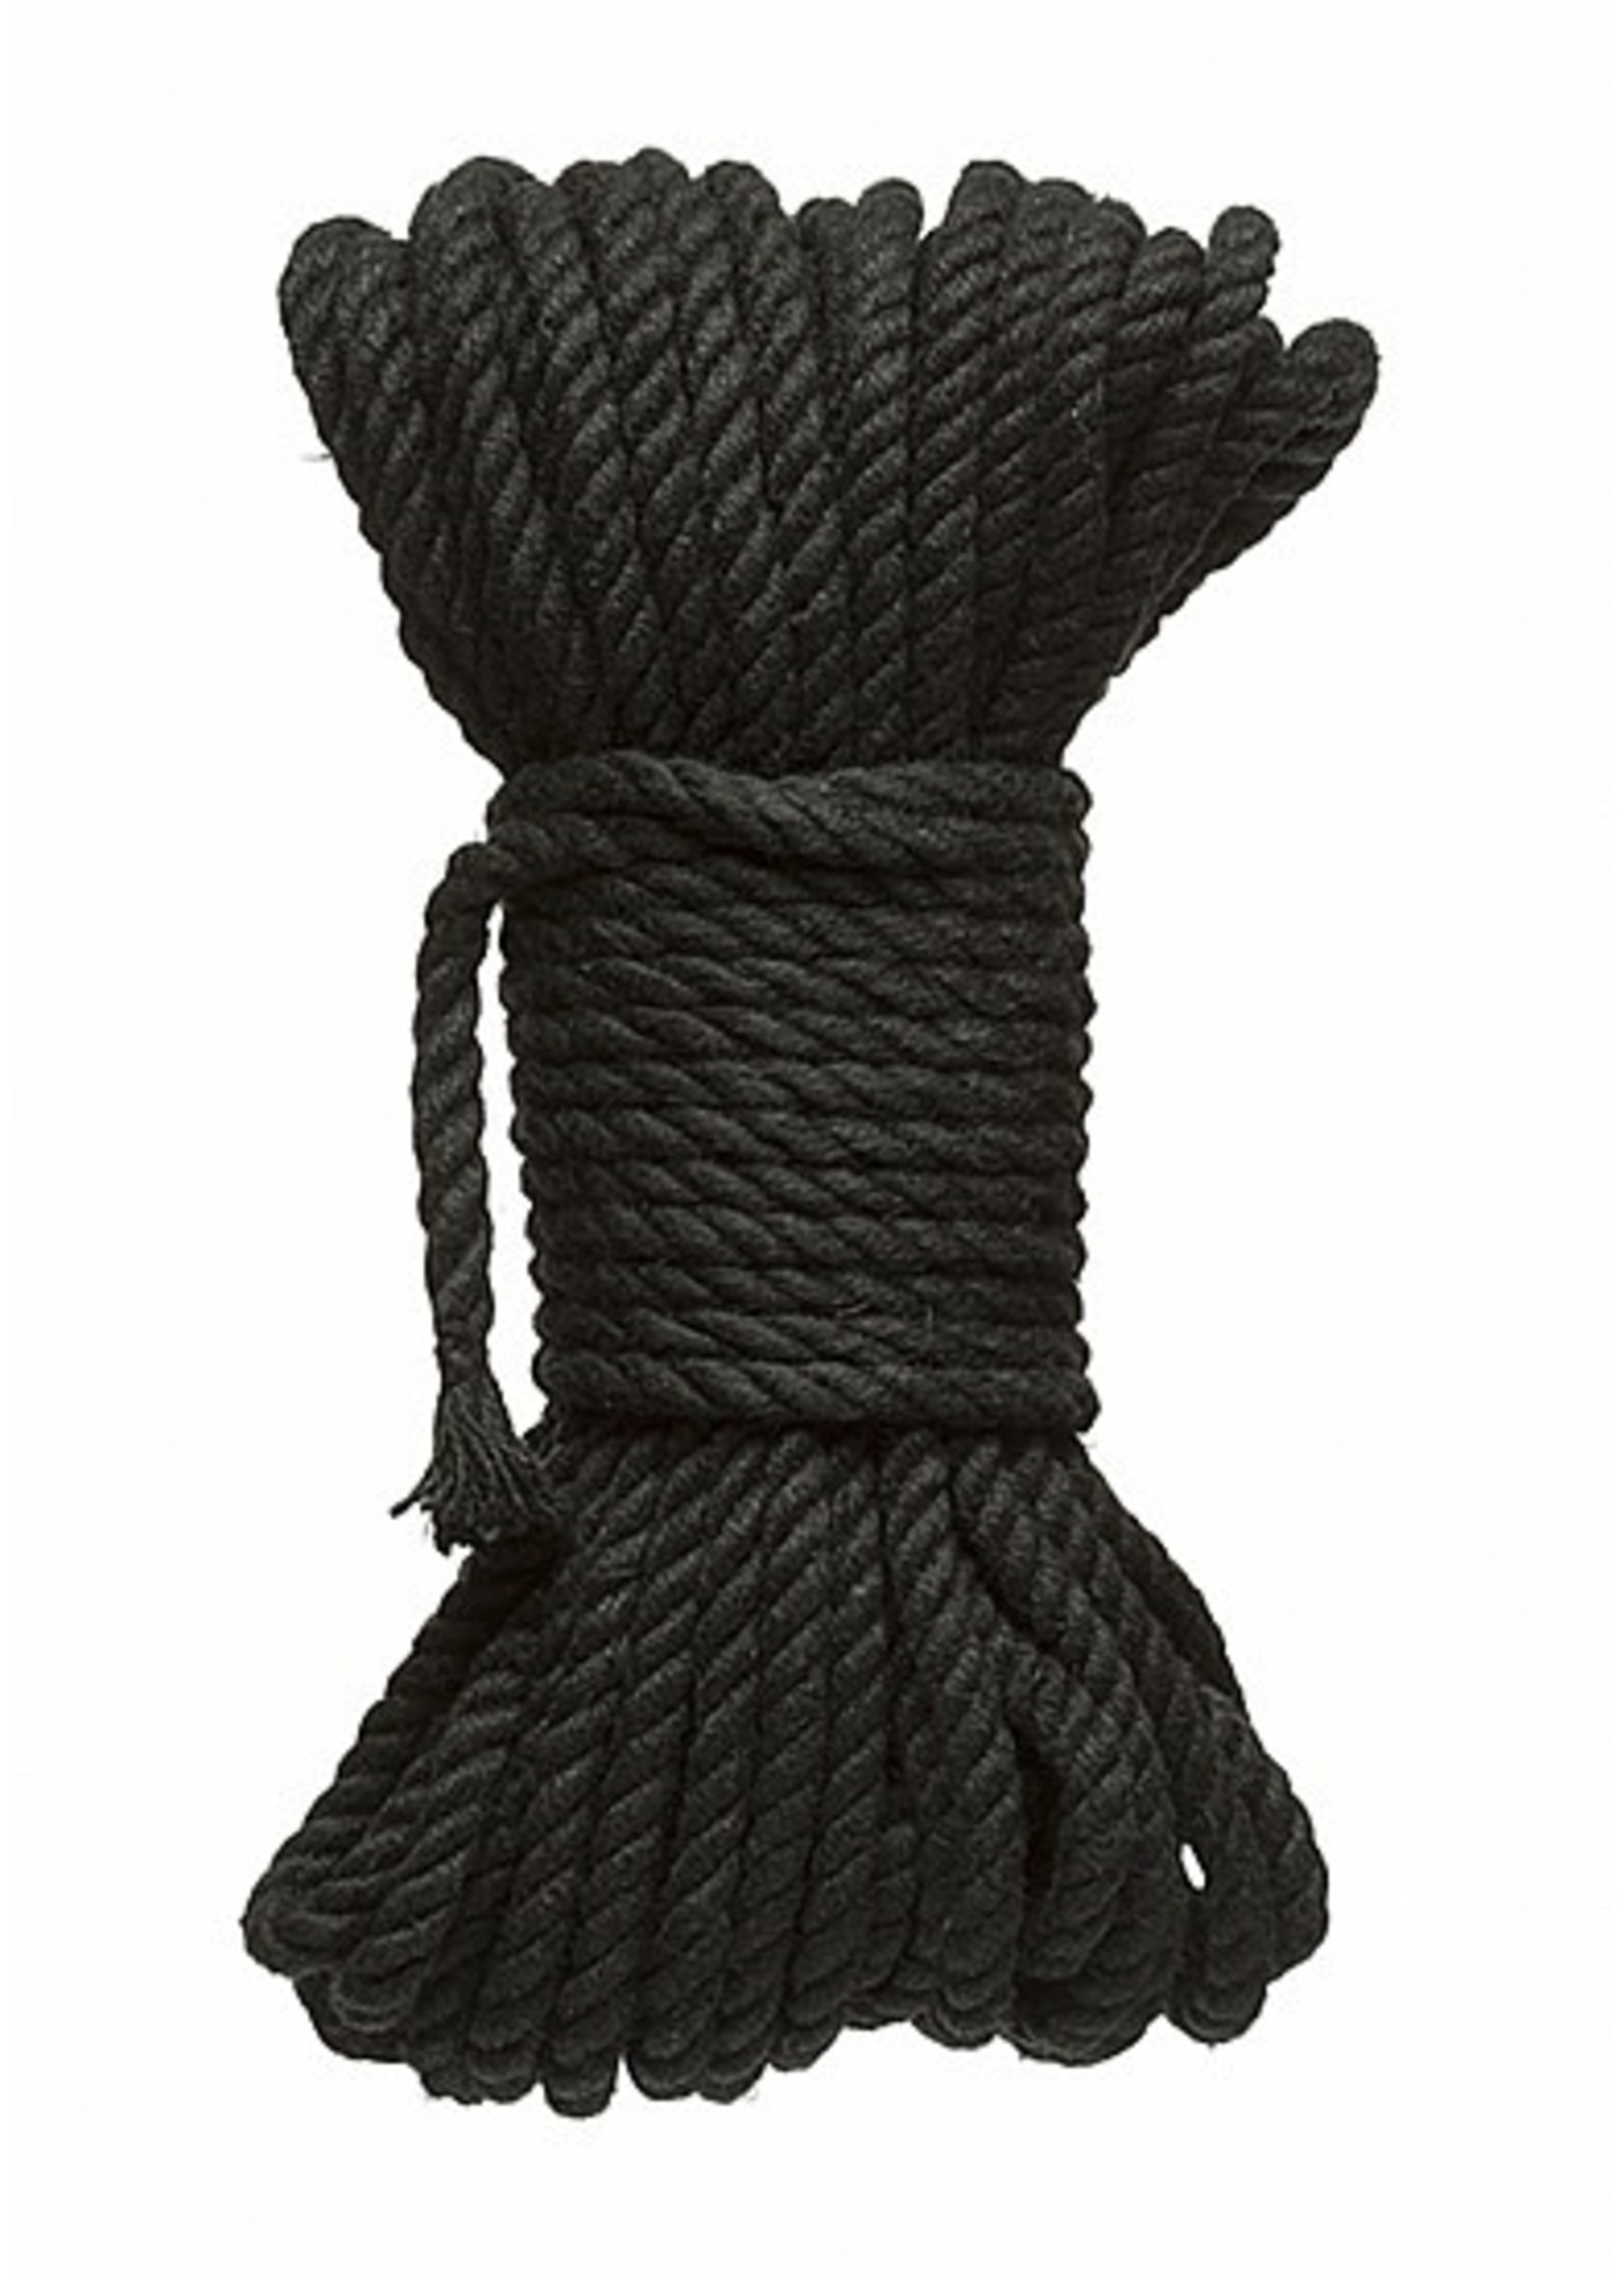 Doc Johnson 6 mm hennep/hemp bondage rope - 50 ft. - black